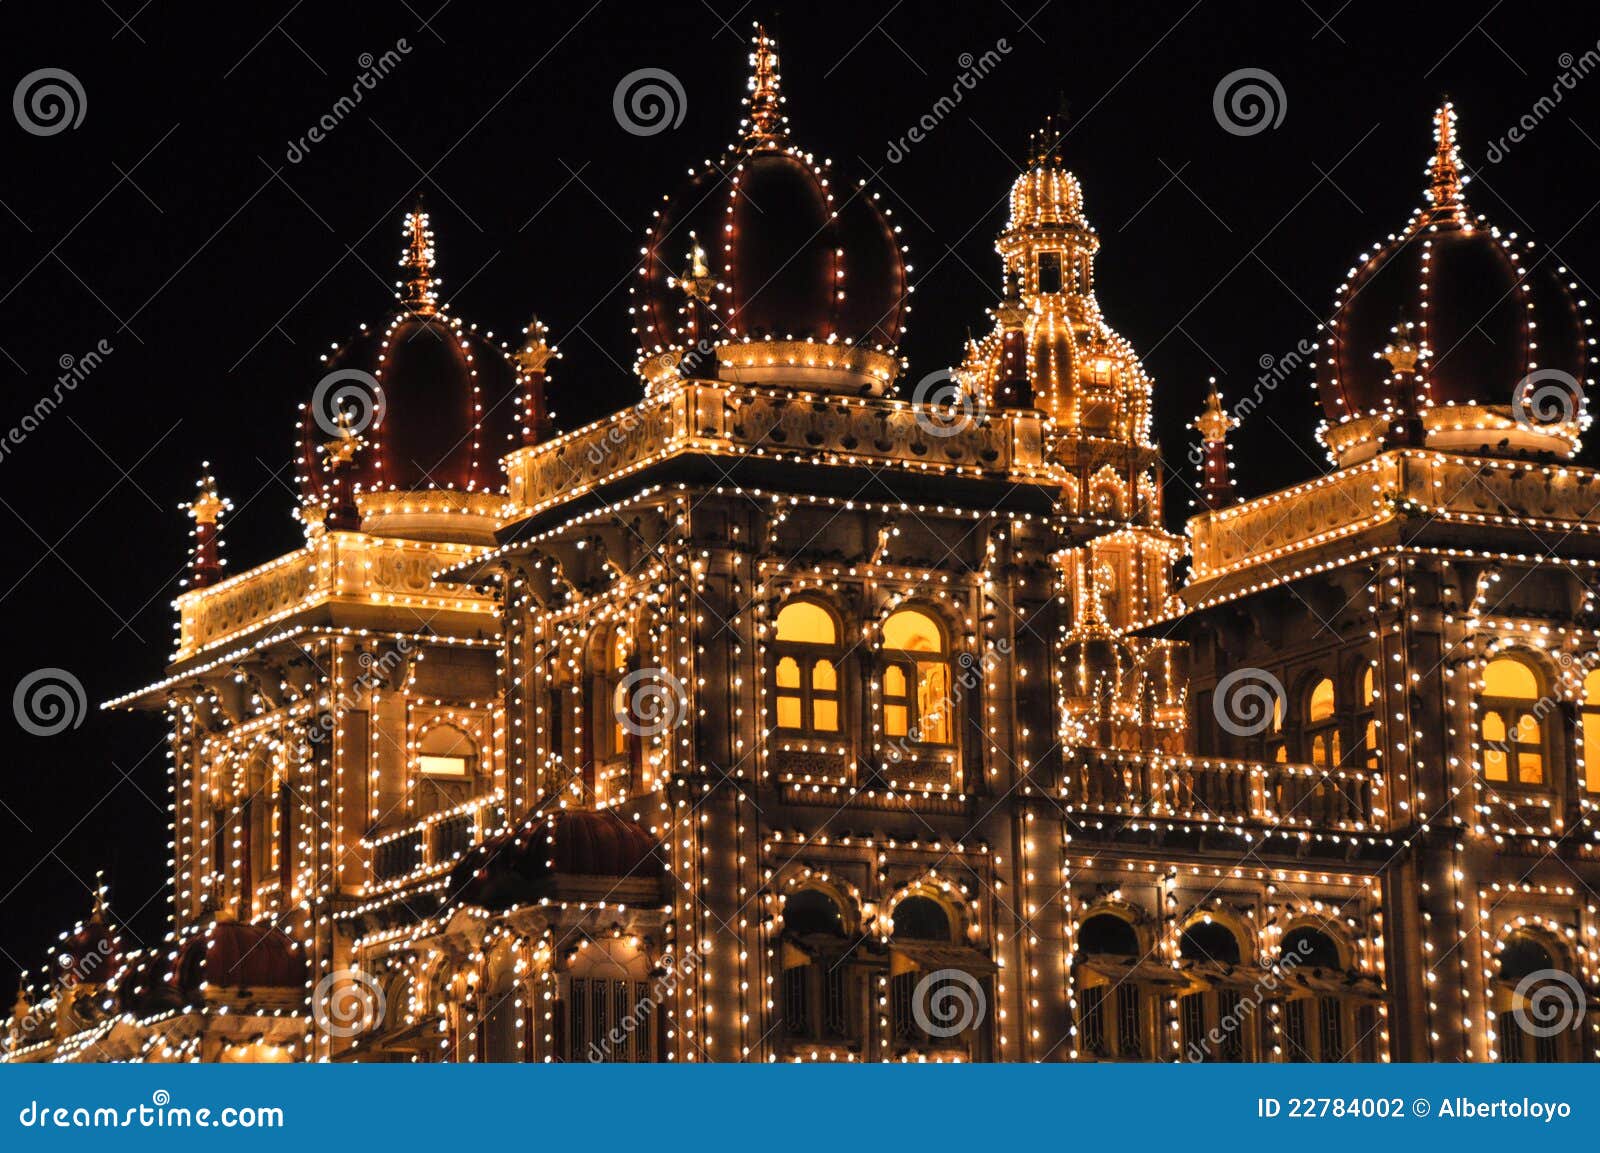 the mysore palace at night